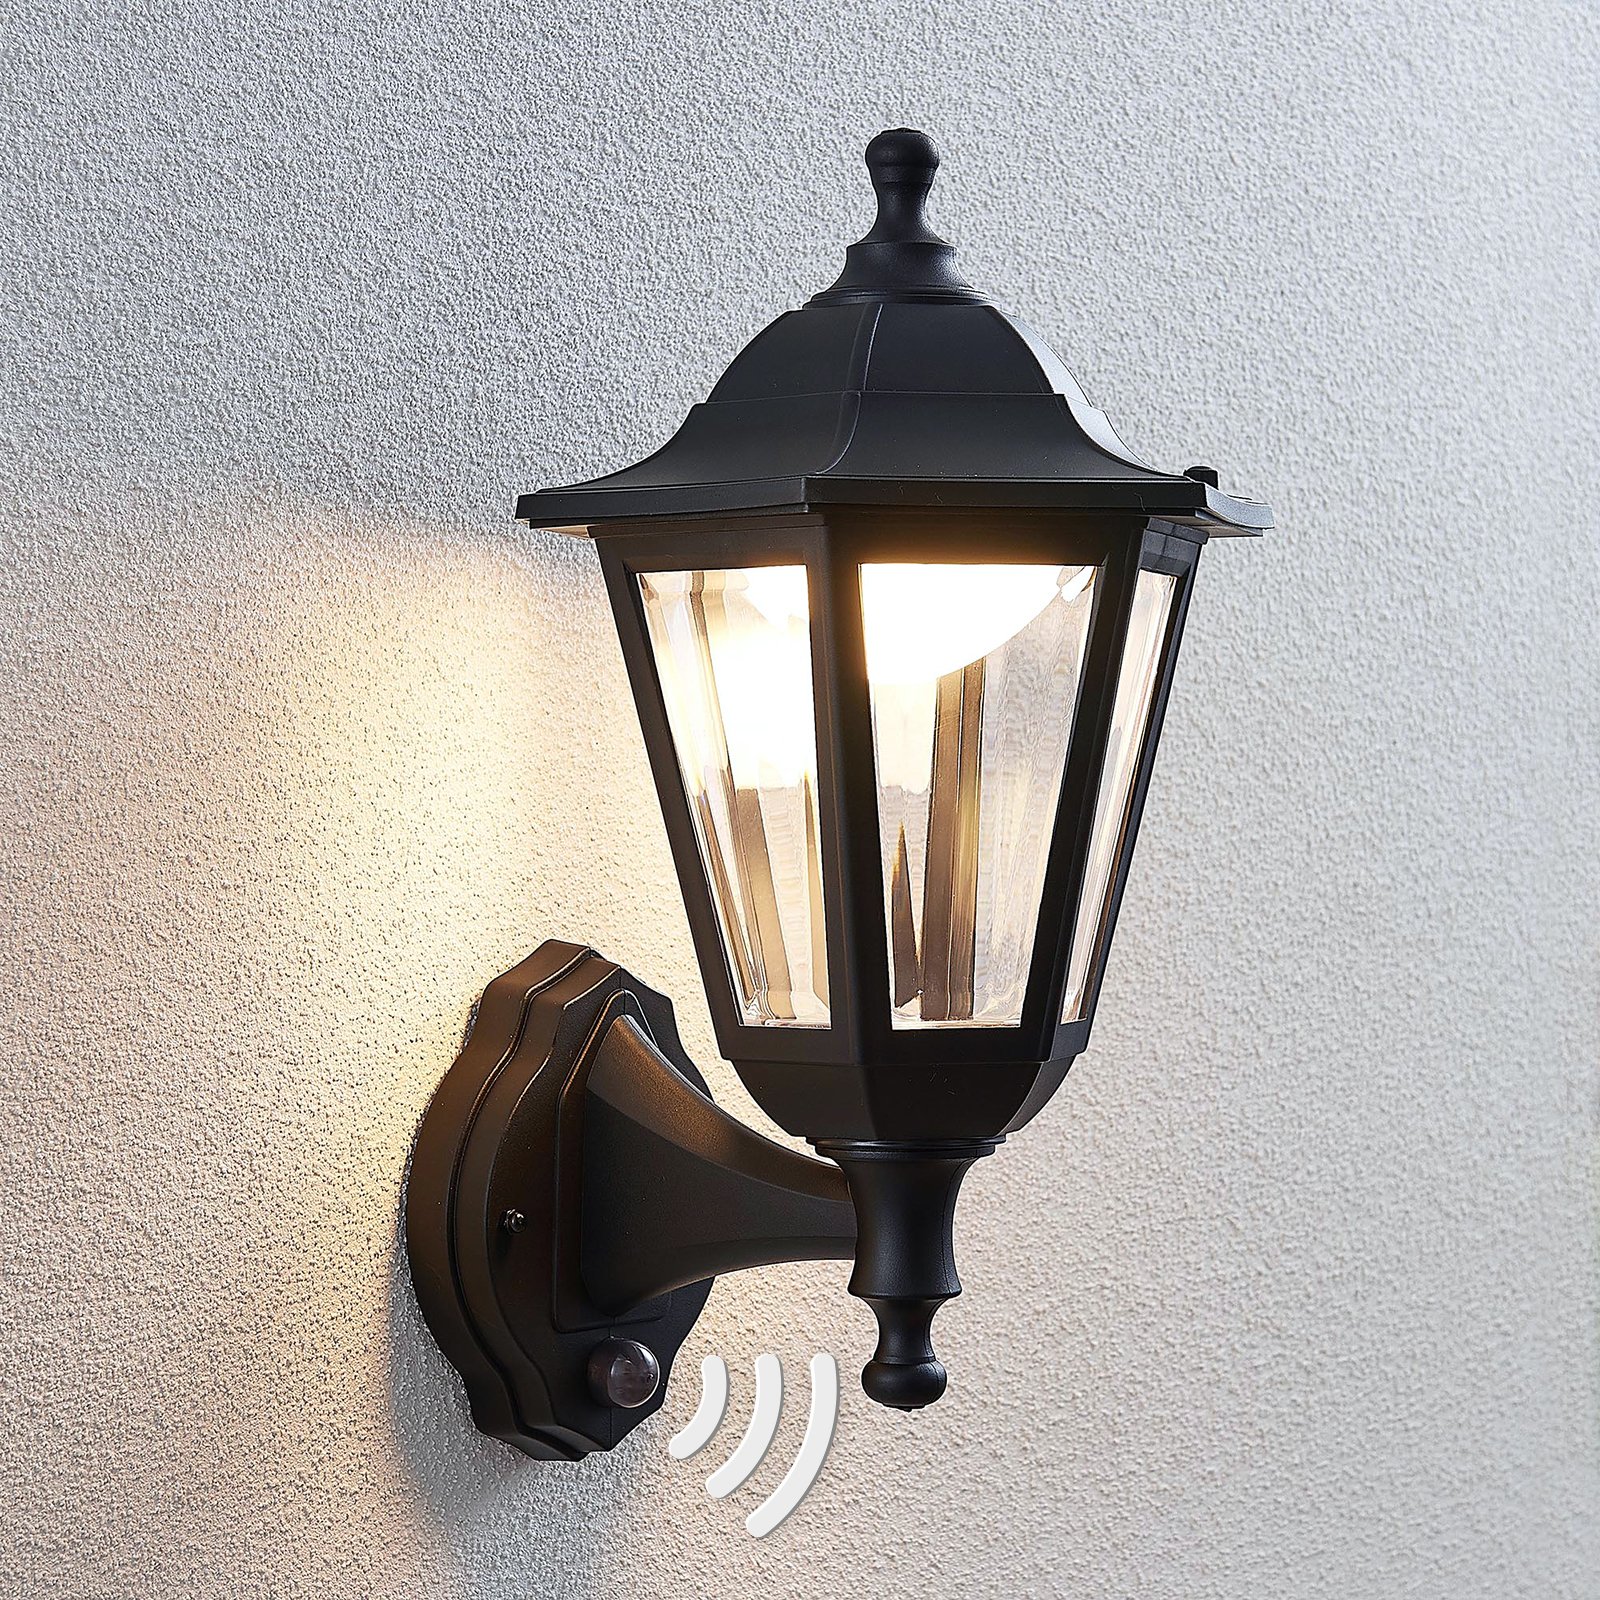 Iavo LED outdoor wall lantern with a sensor